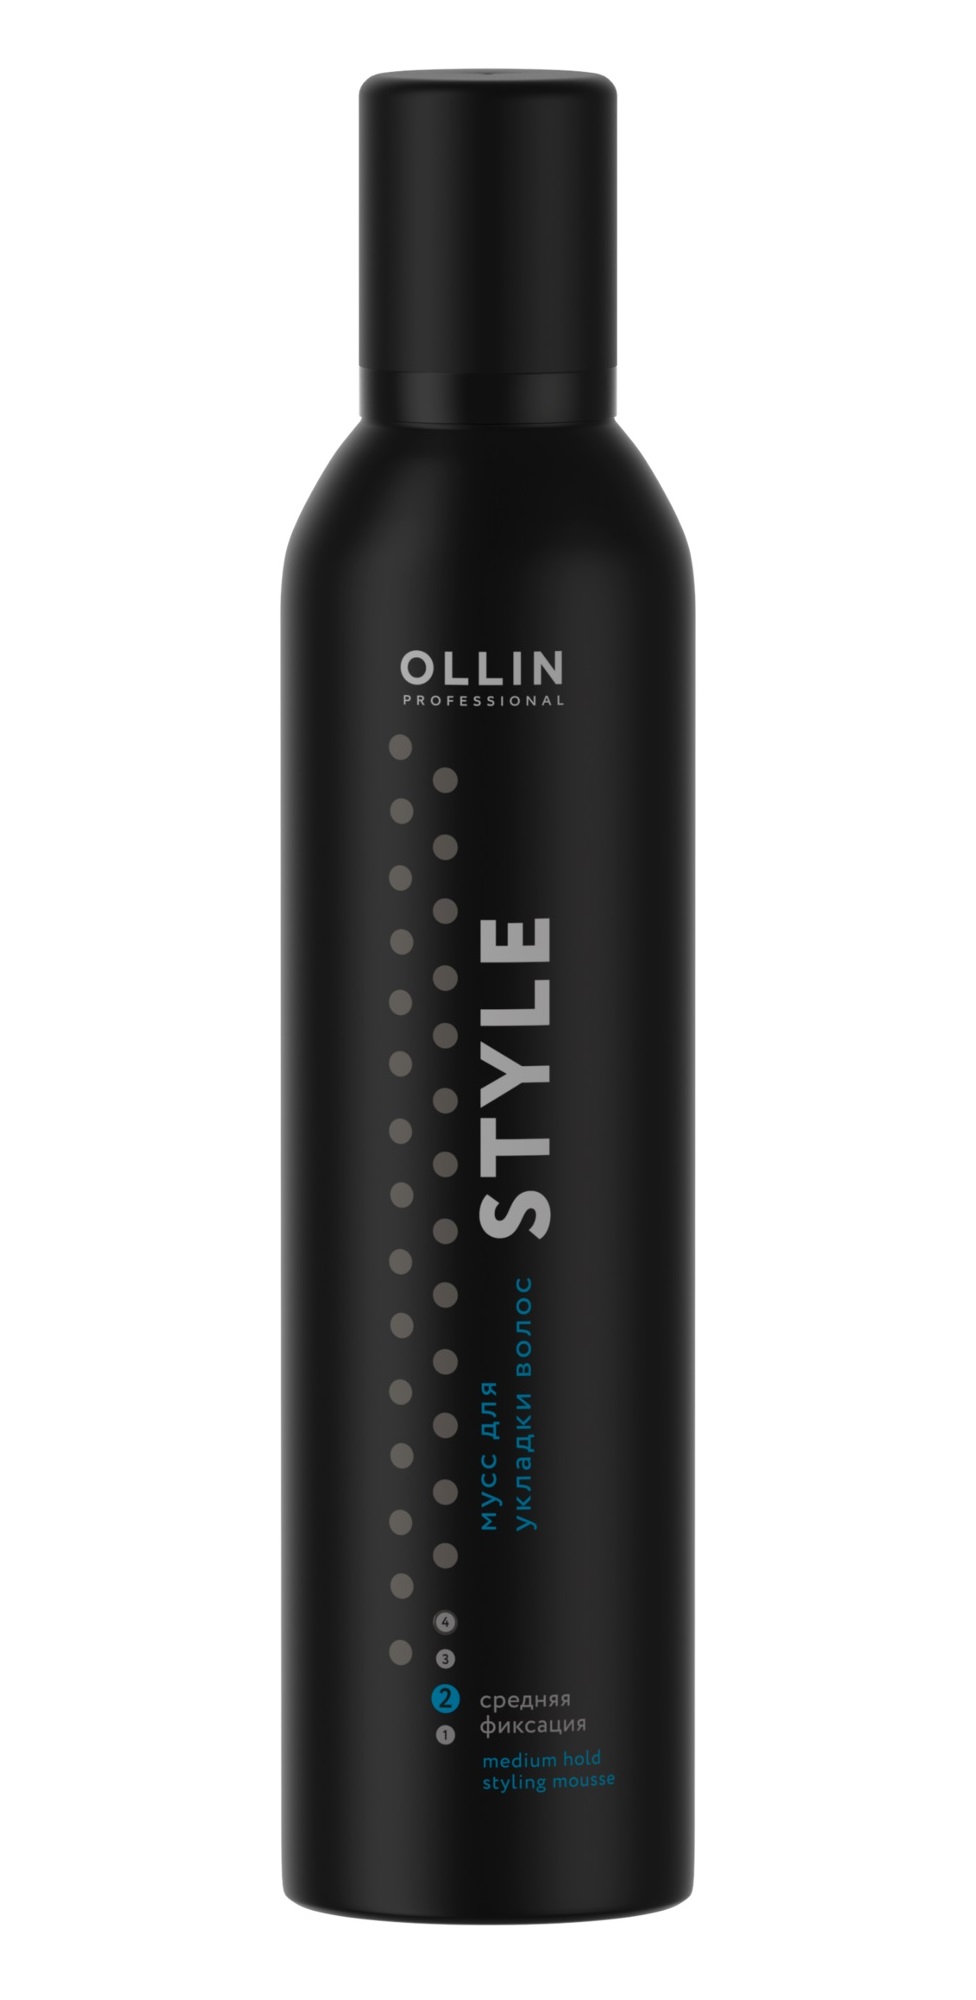 Ollin Professional Мусс для укладки волос средней фиксации, 250 мл (Ollin Professional, Style) мусс ollin professional style д укладки волос средней фиксации 250 мл